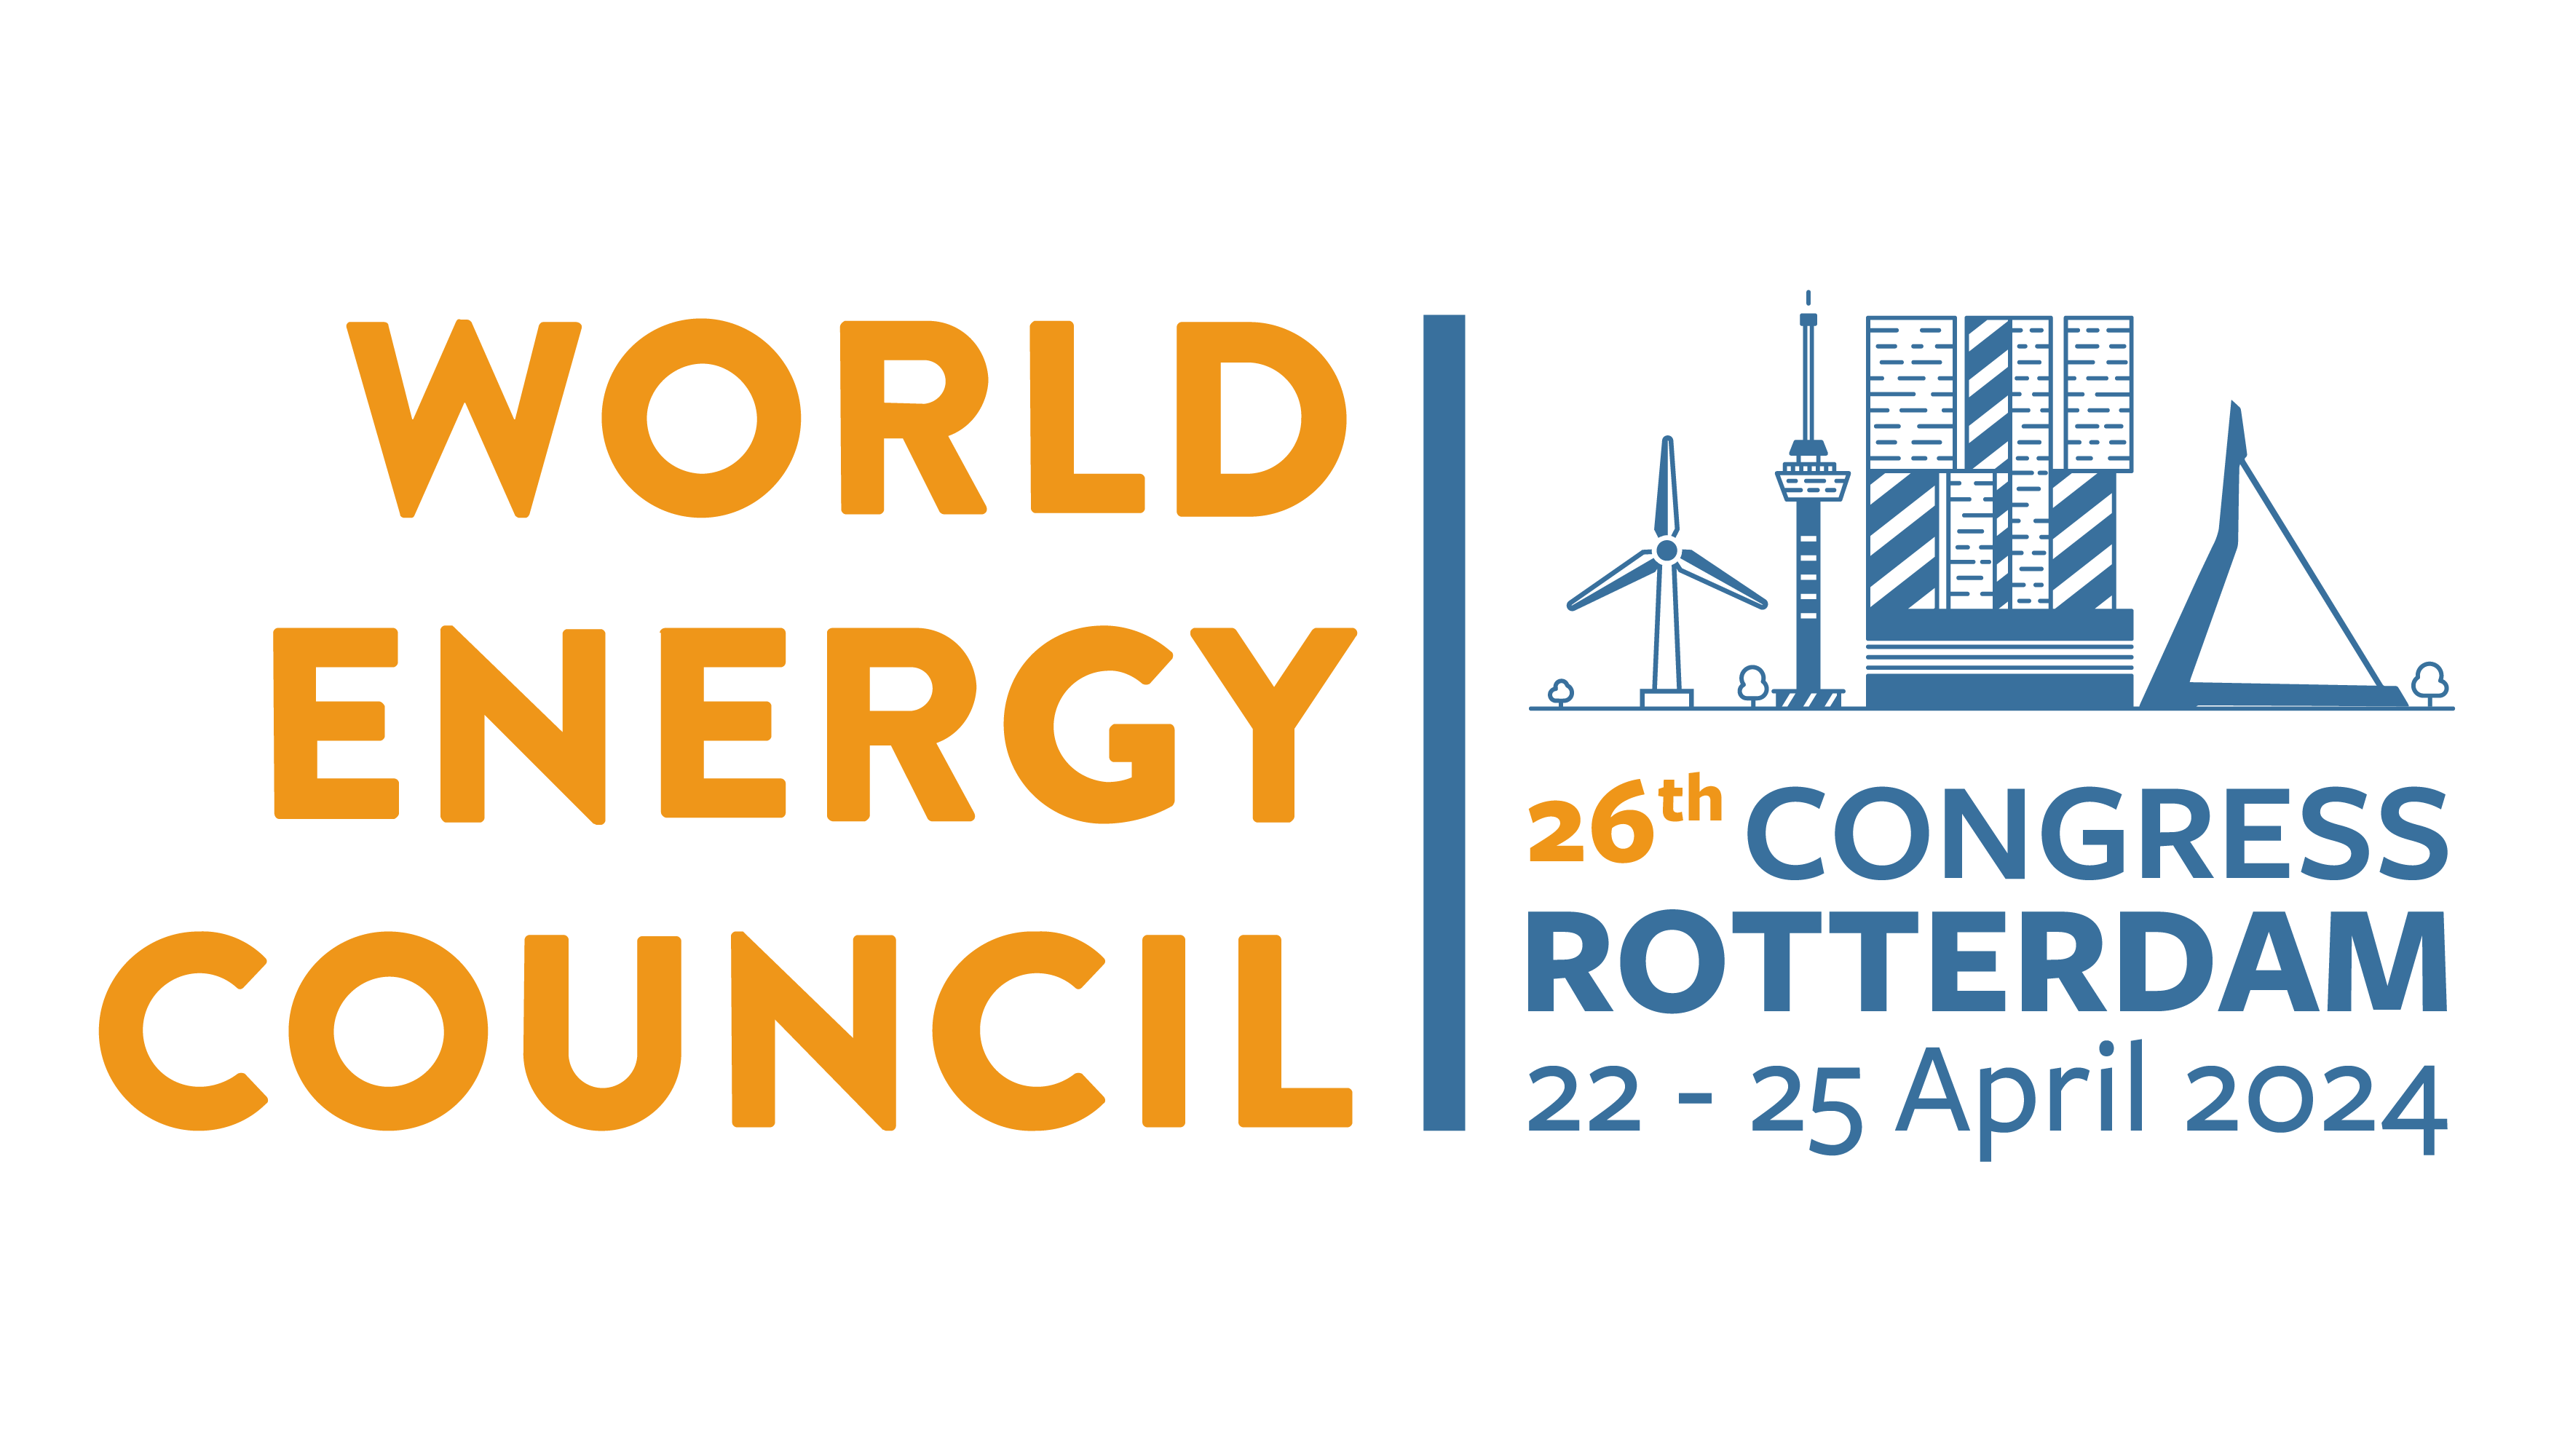  the 26th World Energy Congress